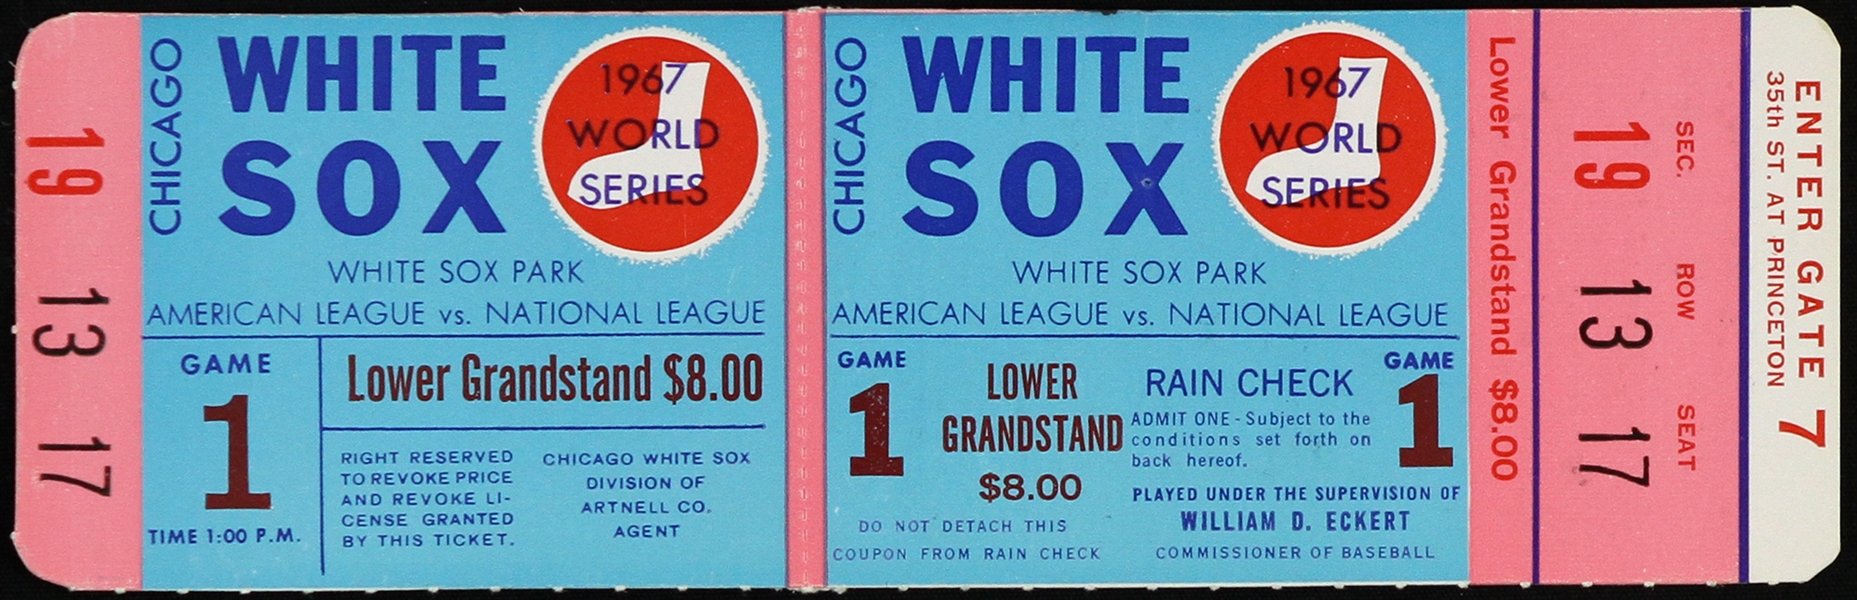 1967 Chicago White Sox World Series Game 1 Ticket 